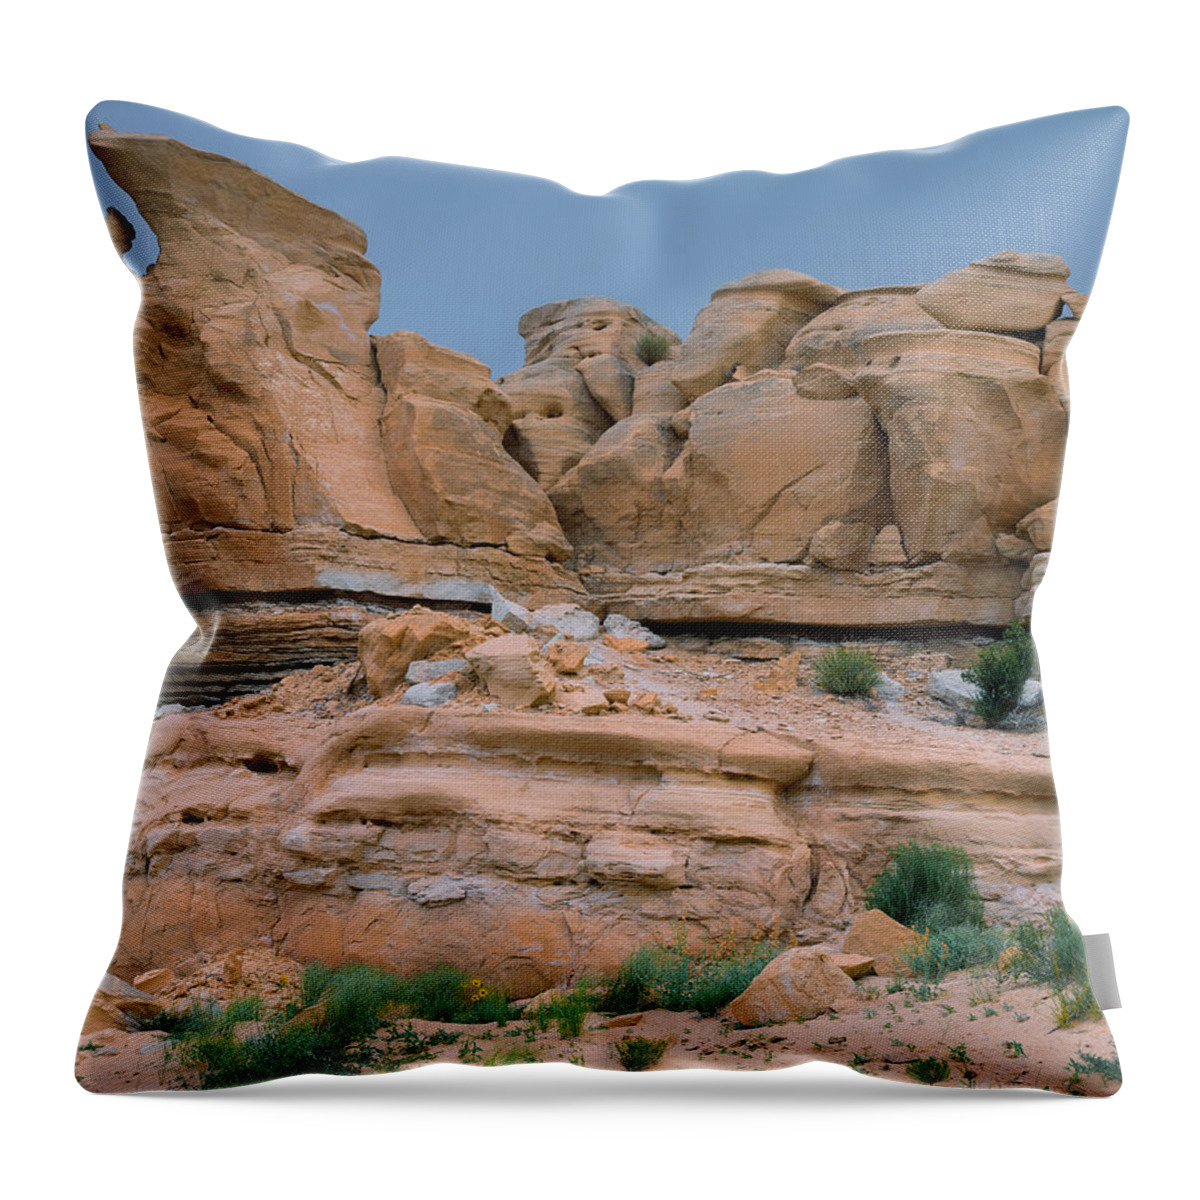 Landscape Throw Pillow featuring the photograph Spartan Look by Paul Breitkreuz